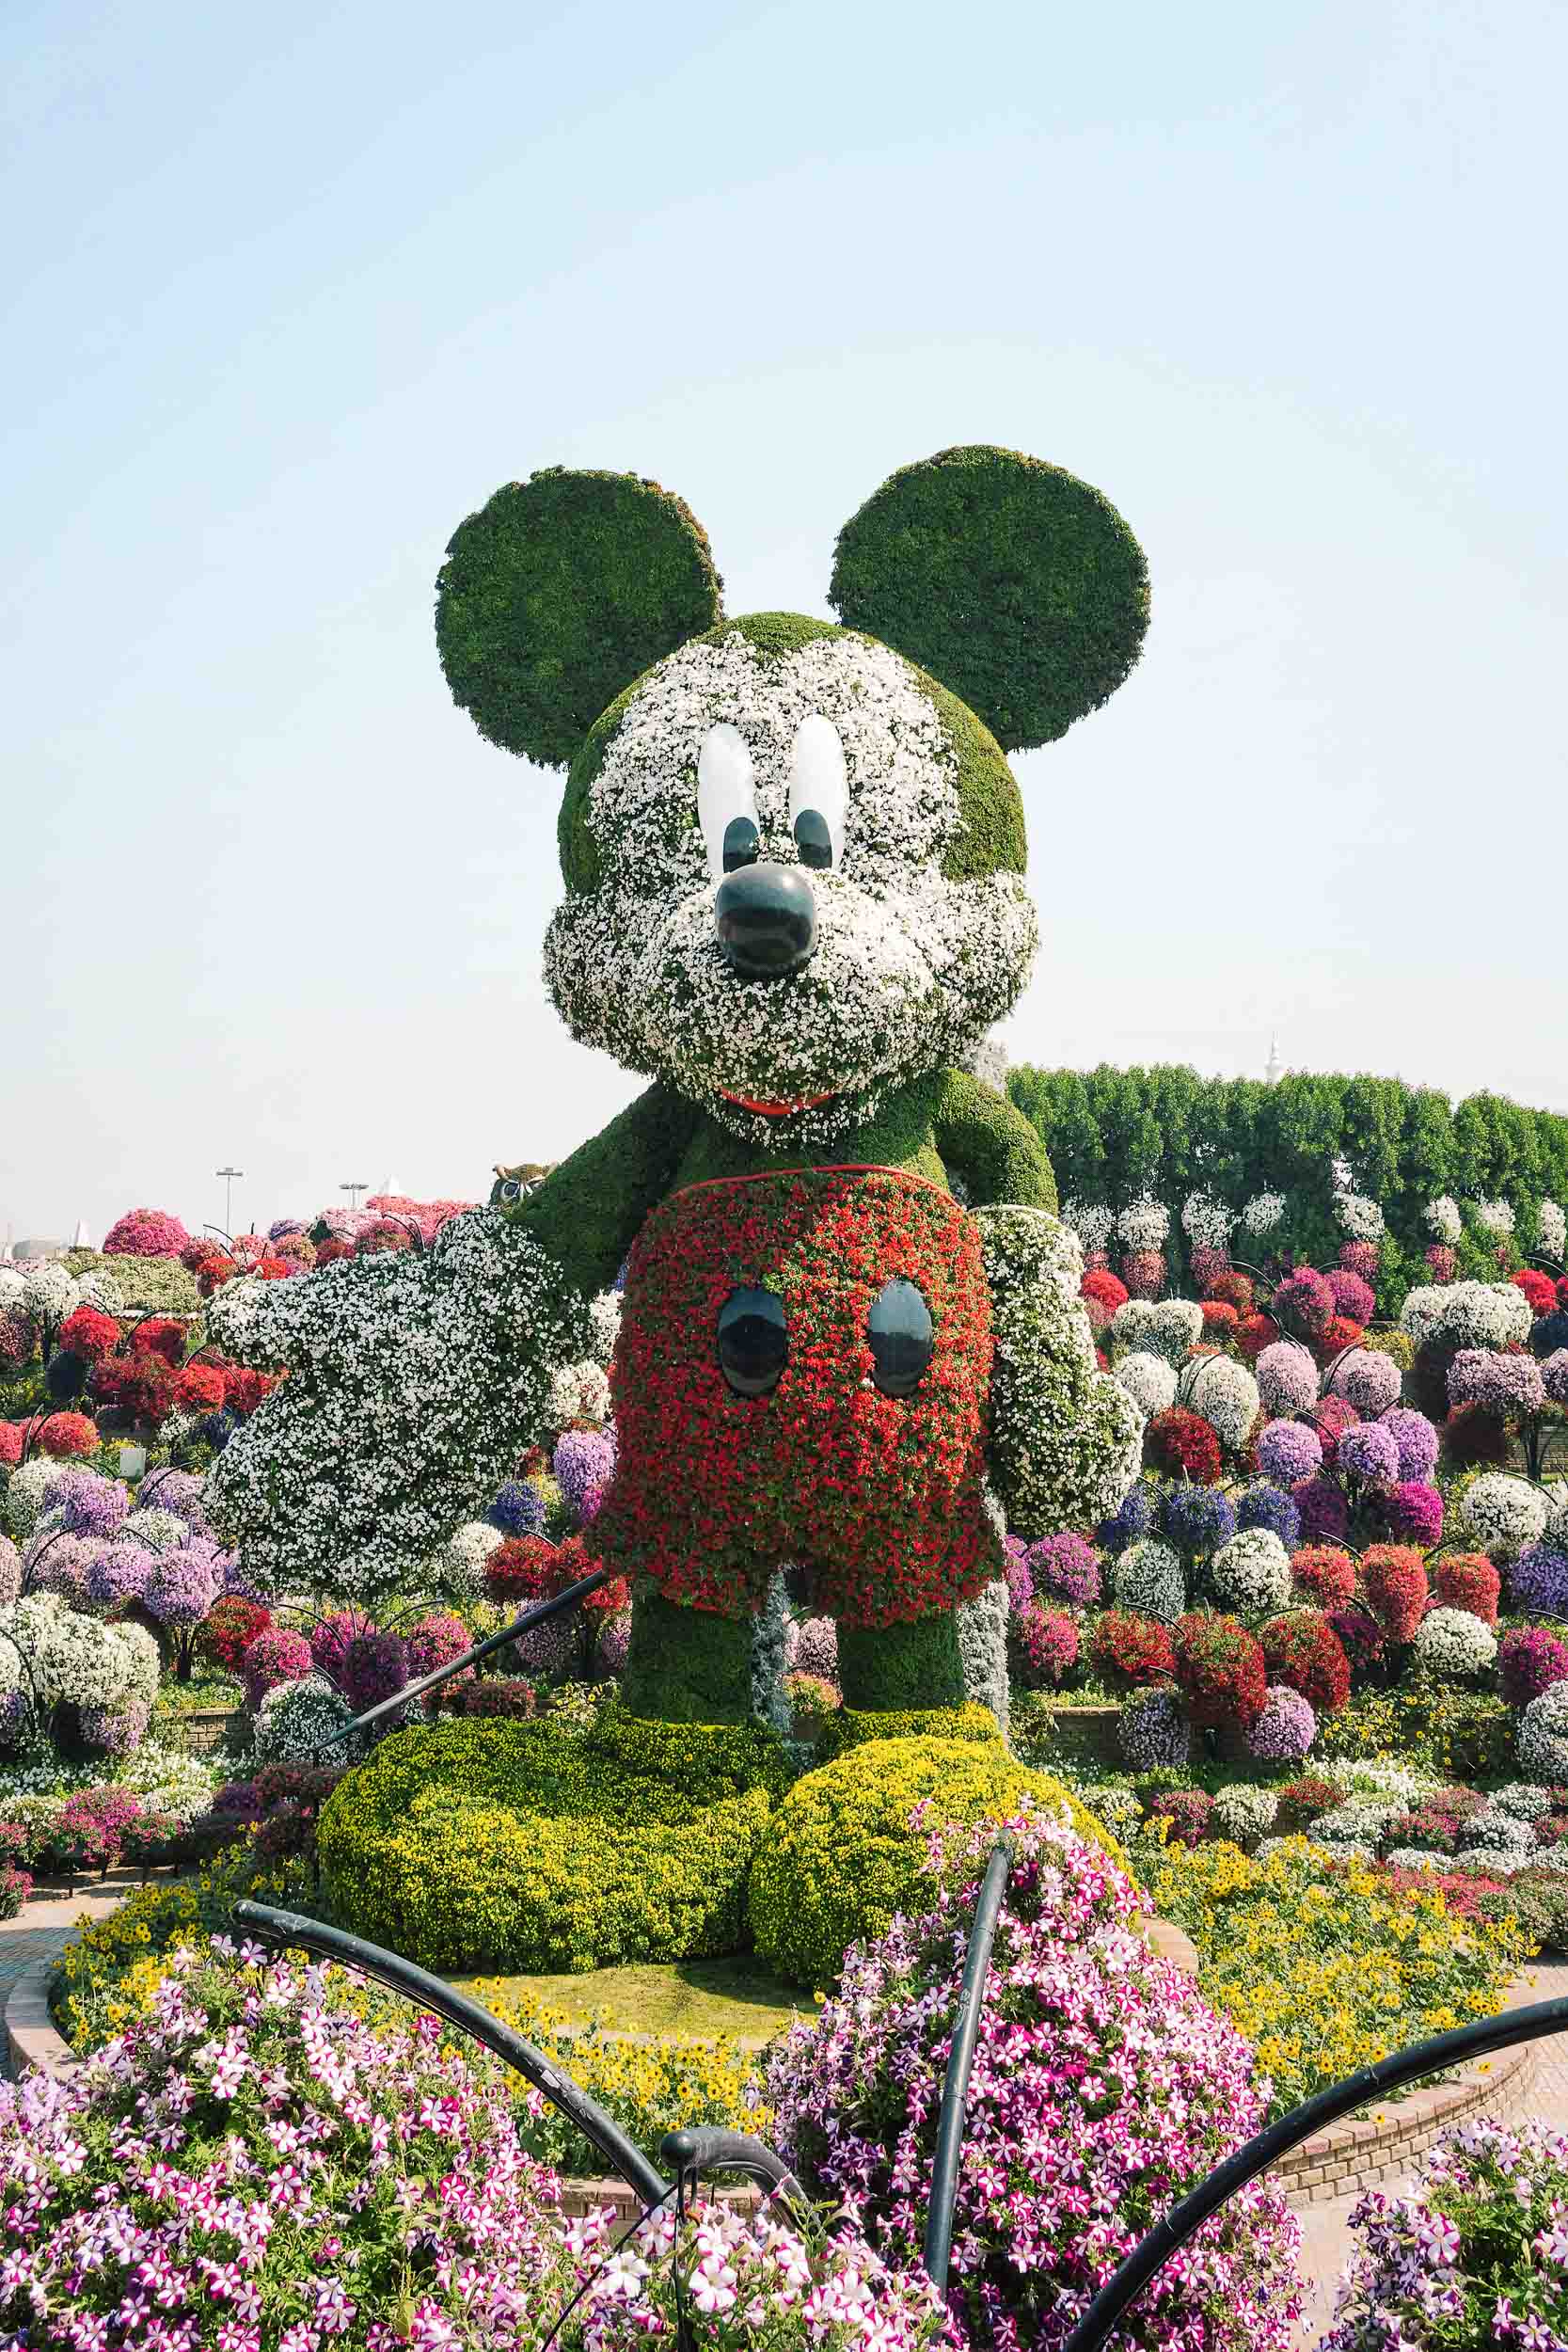 Mickey Mouse at the Dubai Miracle Garden